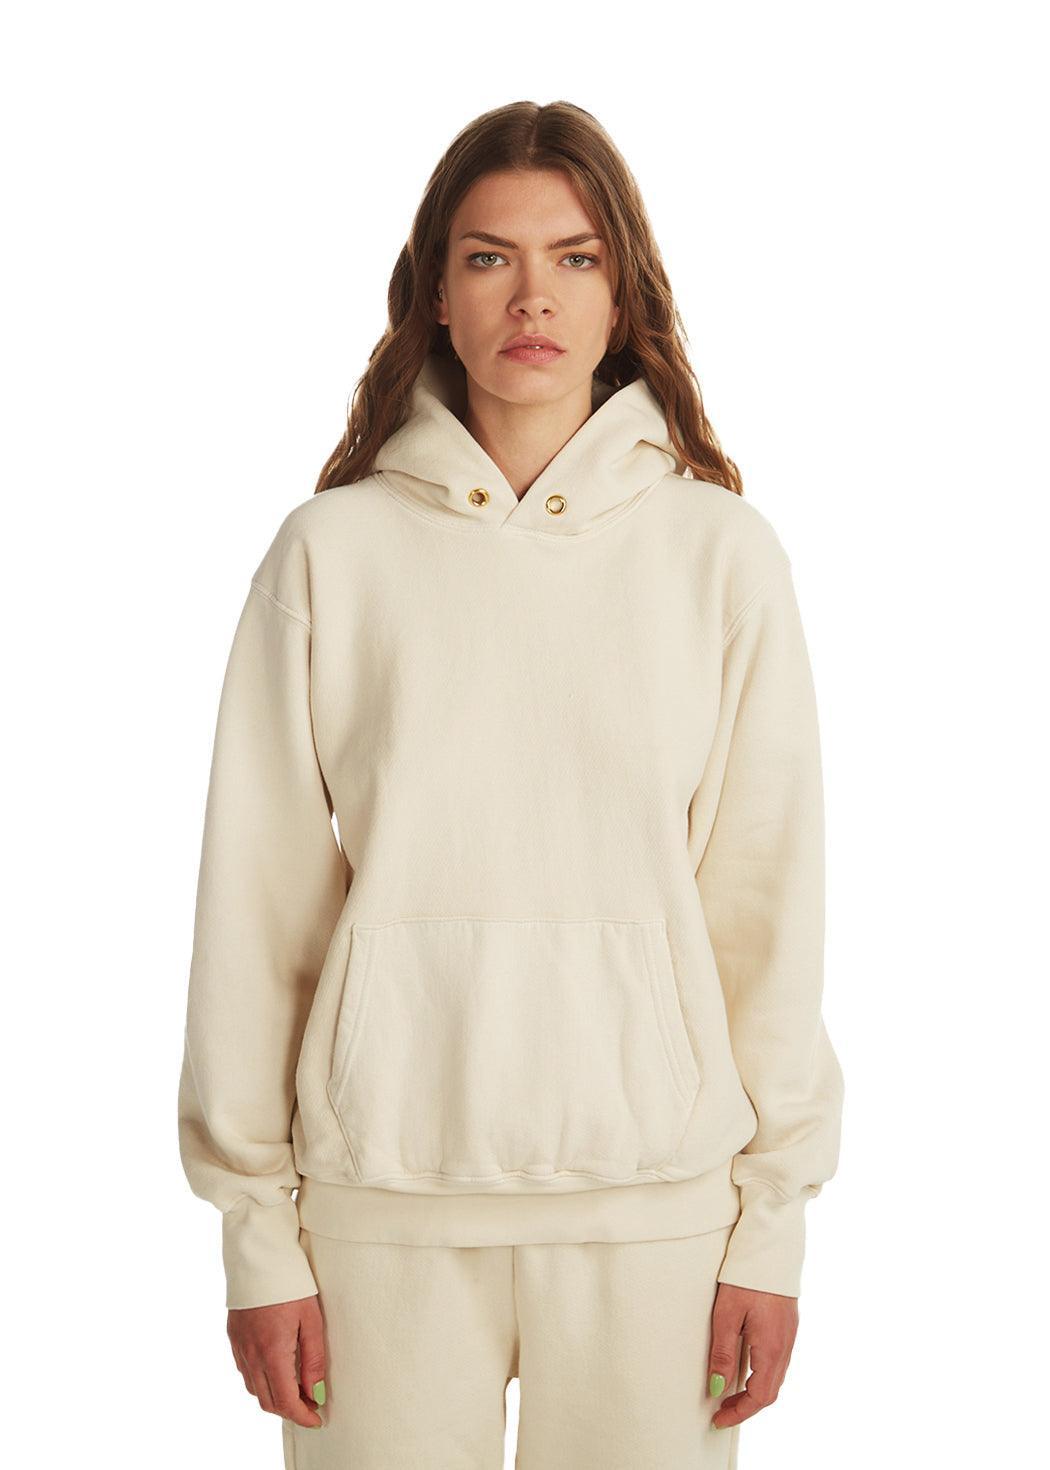 Les Tien - Ivory Hooded Sweatshirt - 32 The Guild 